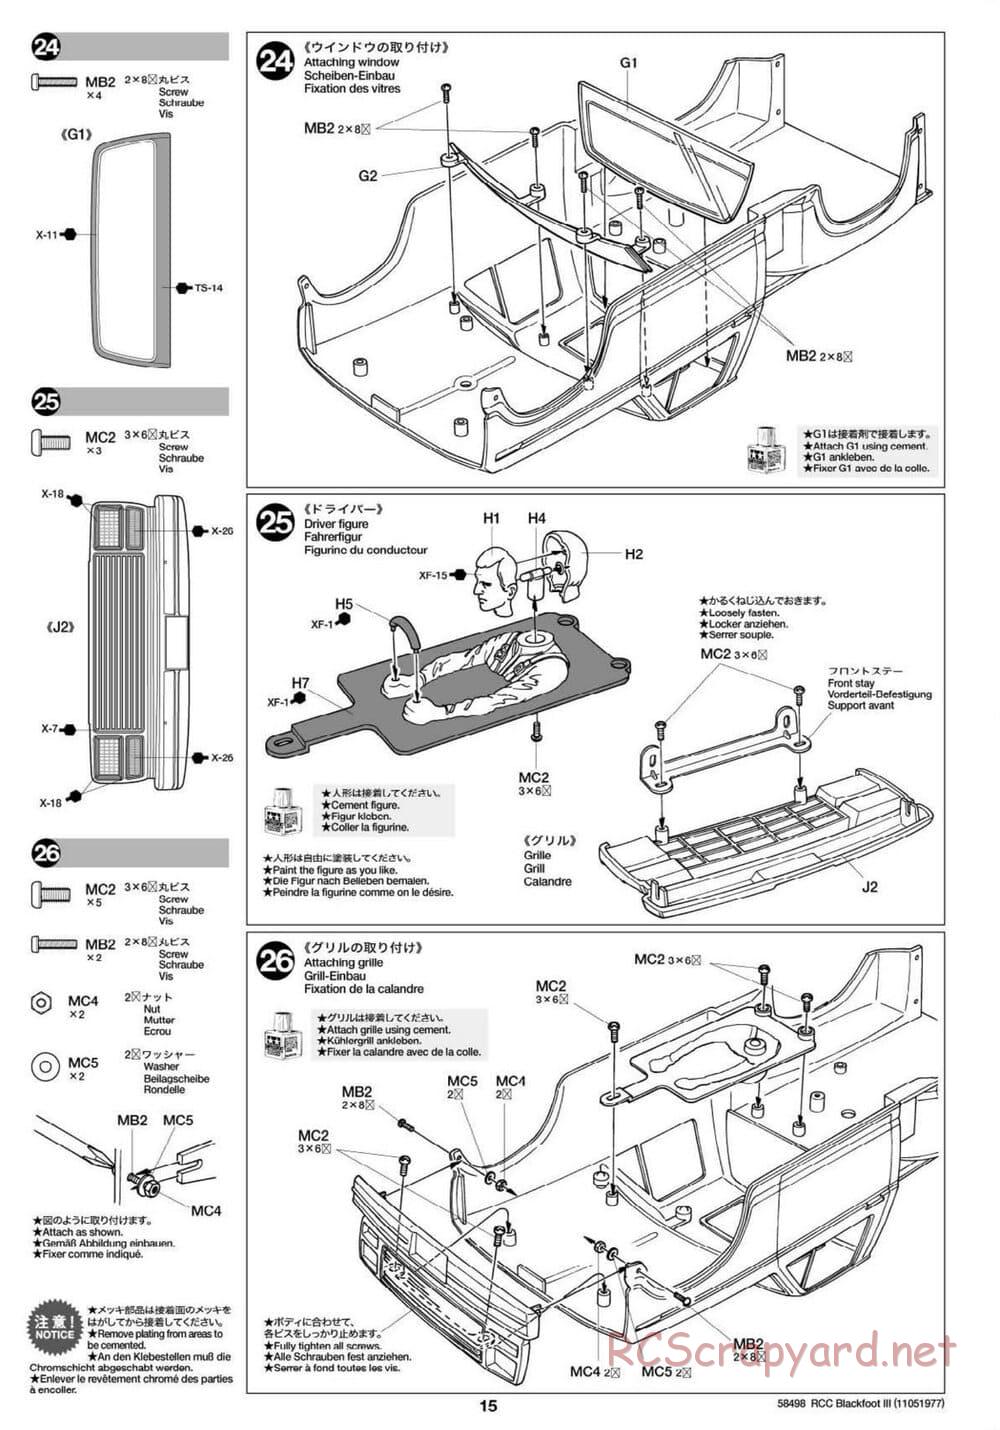 Tamiya - Blackfoot III - WT-01 Chassis - Manual - Page 15